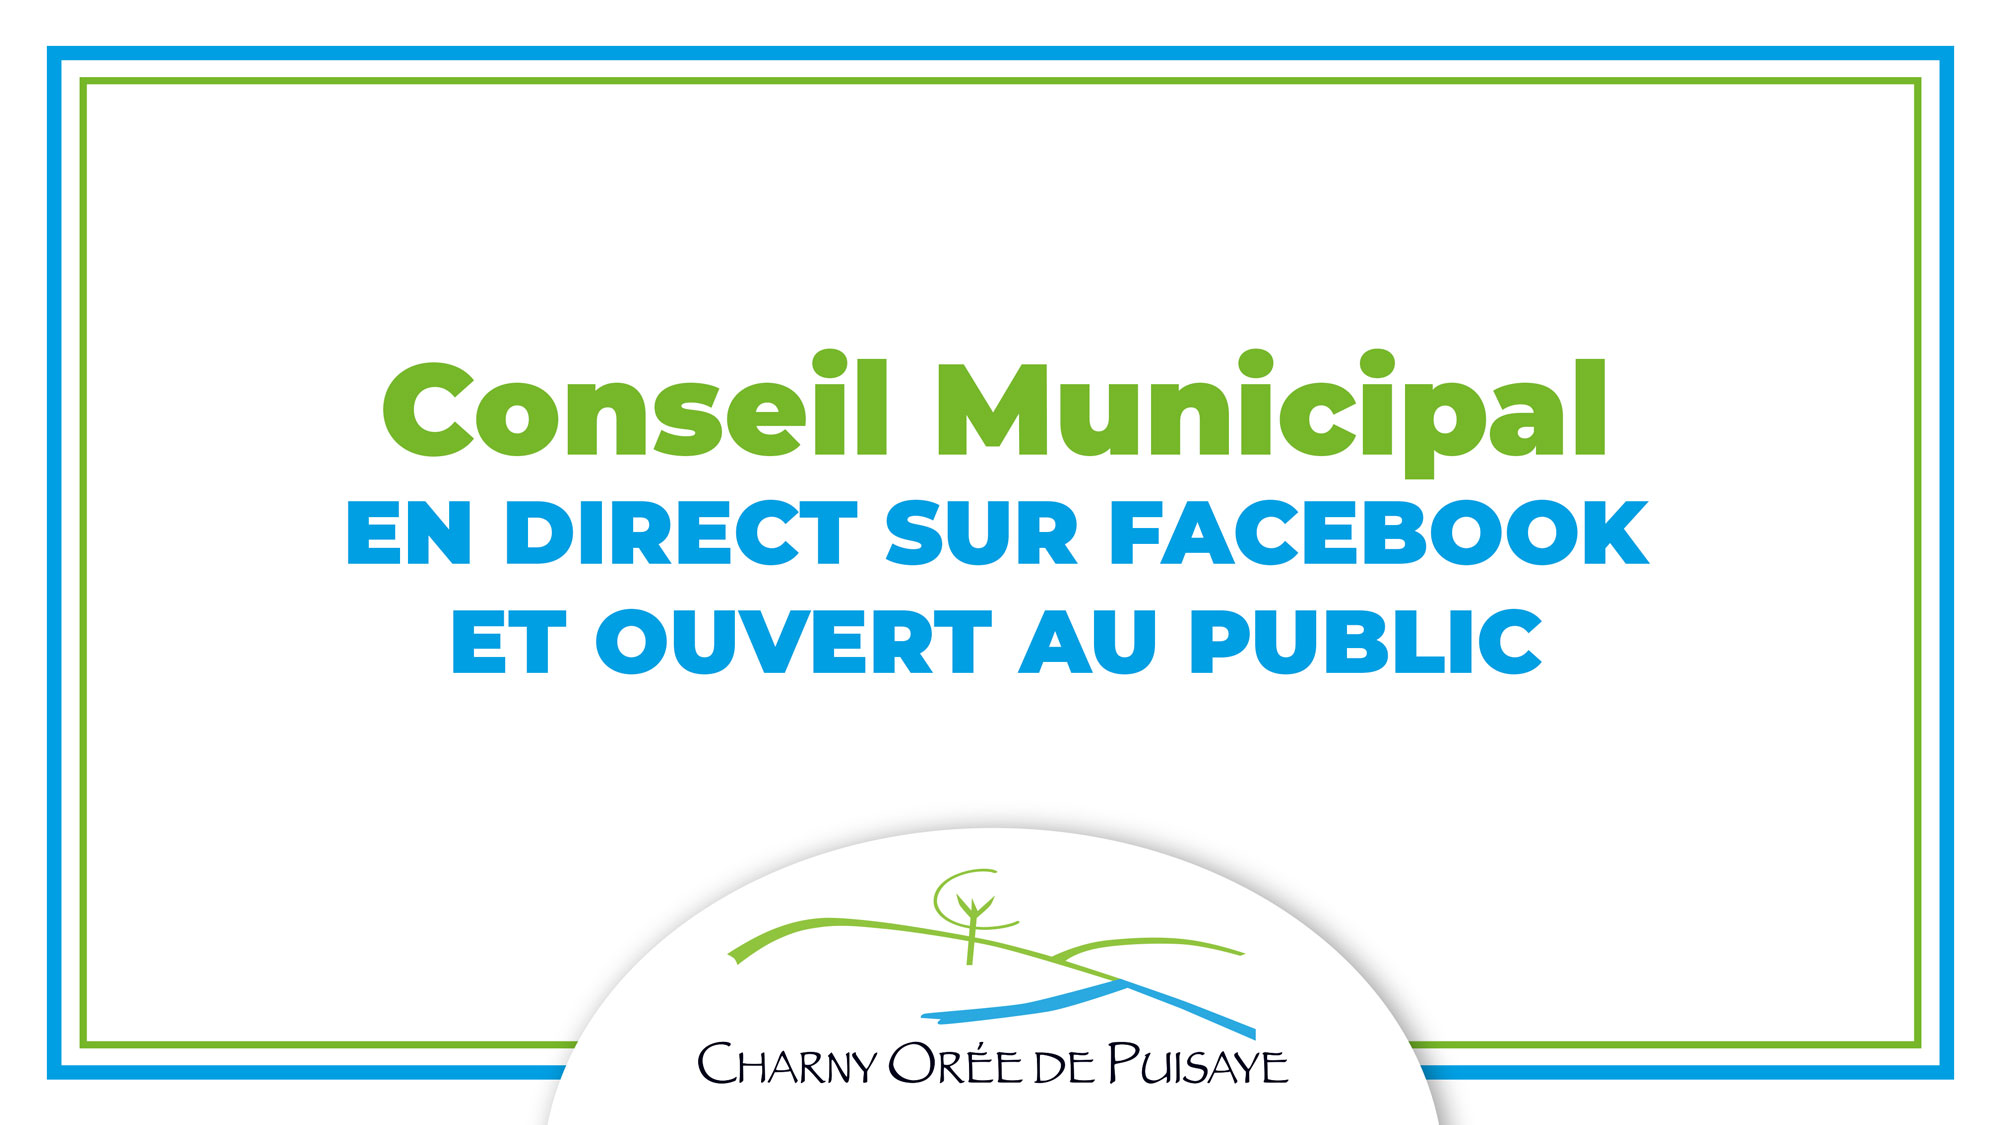 Conseil municipal Charny Orée de Puisaye